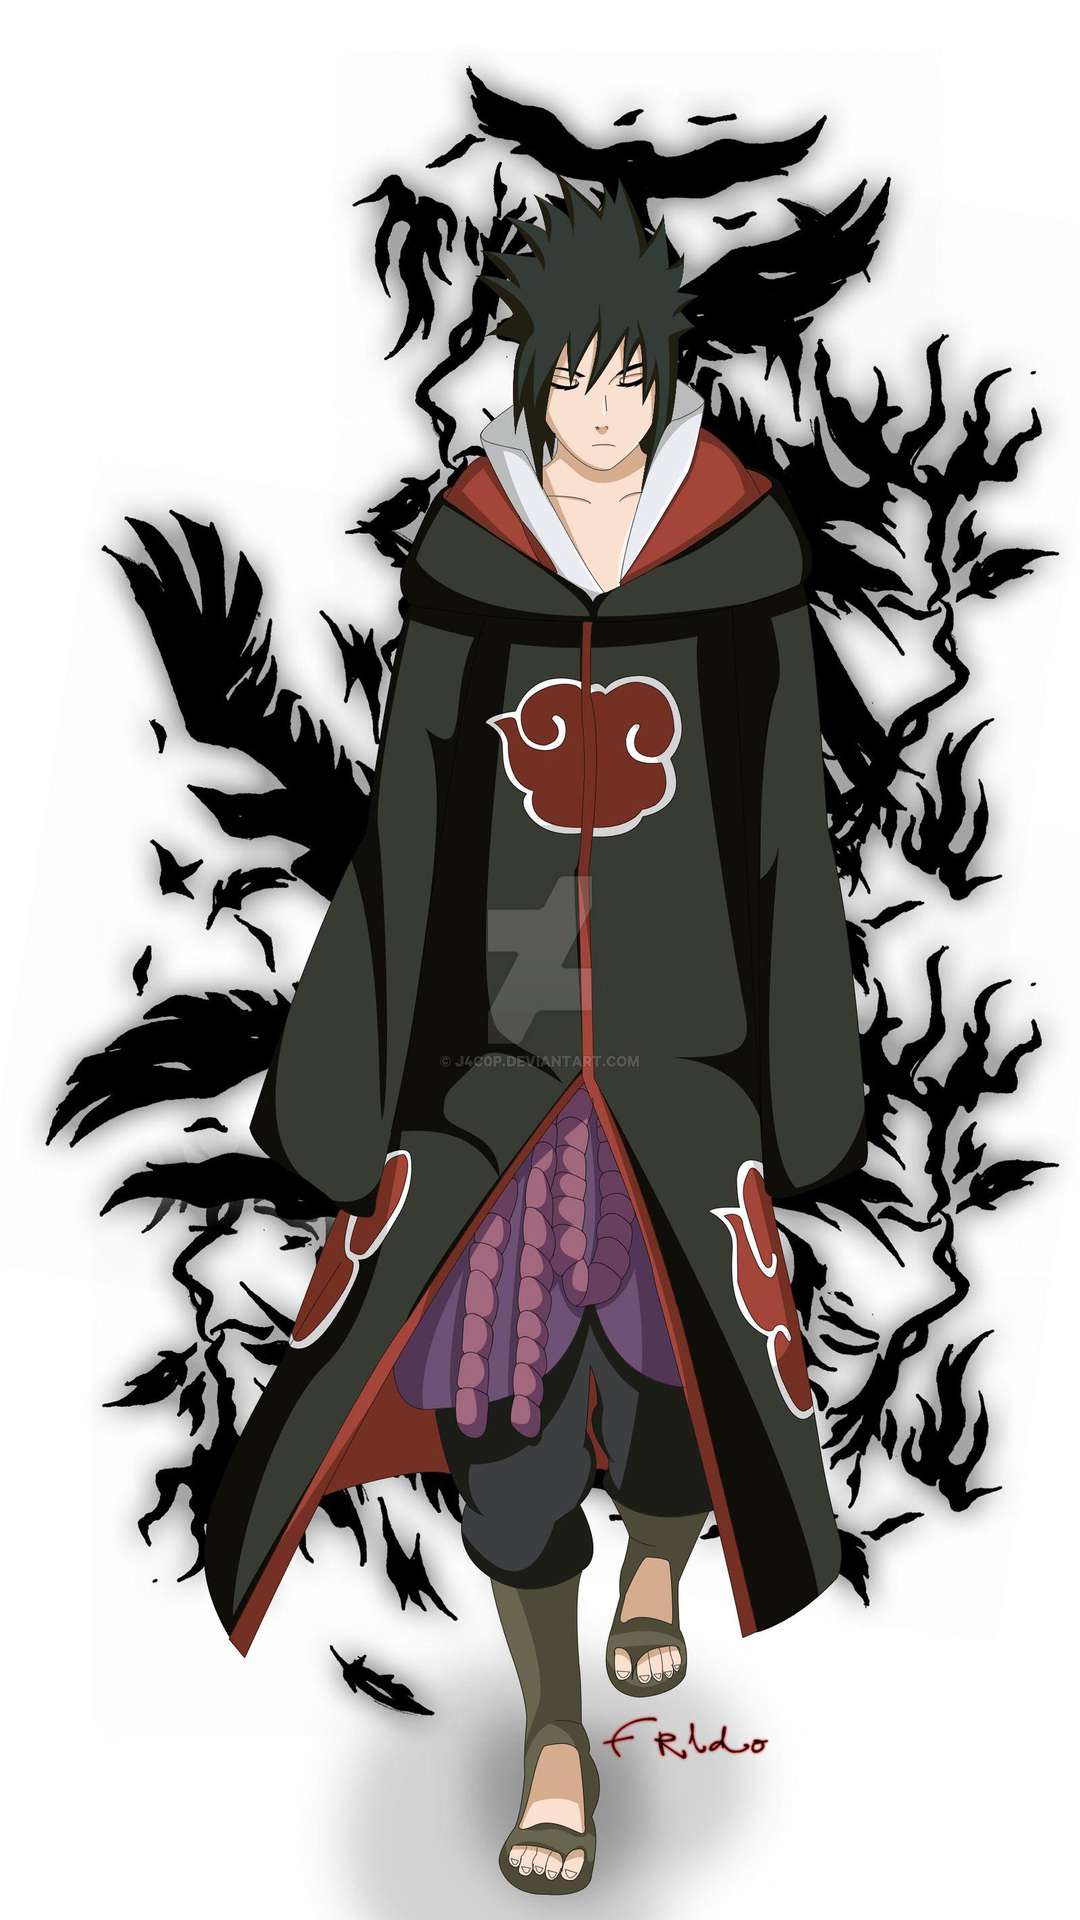 Anime character with black coat and red pants - Sasuke Uchiha